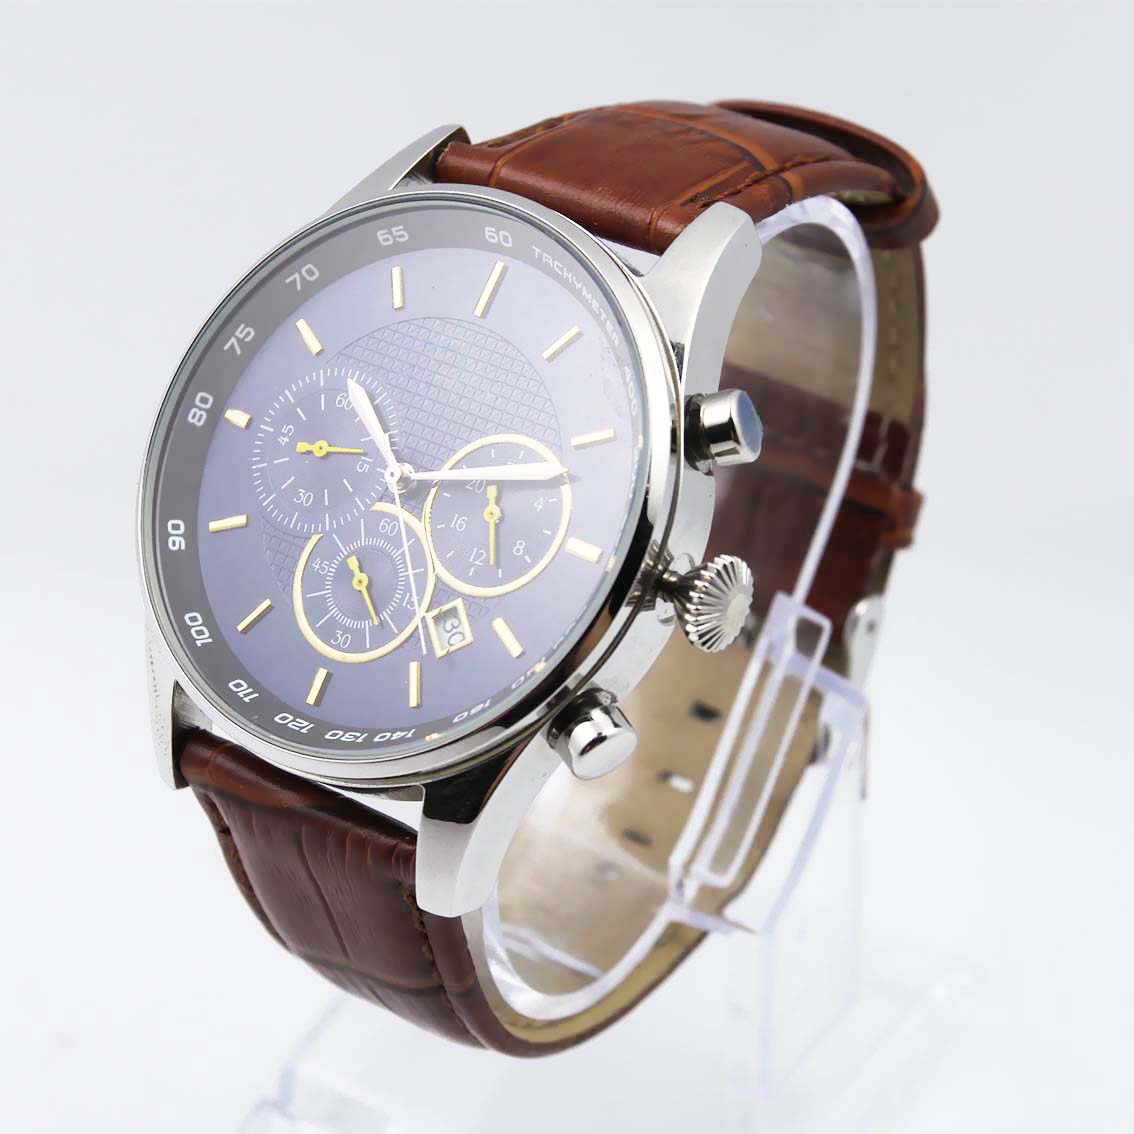 #02091Men's wristwatch quartz analog leather strap watch